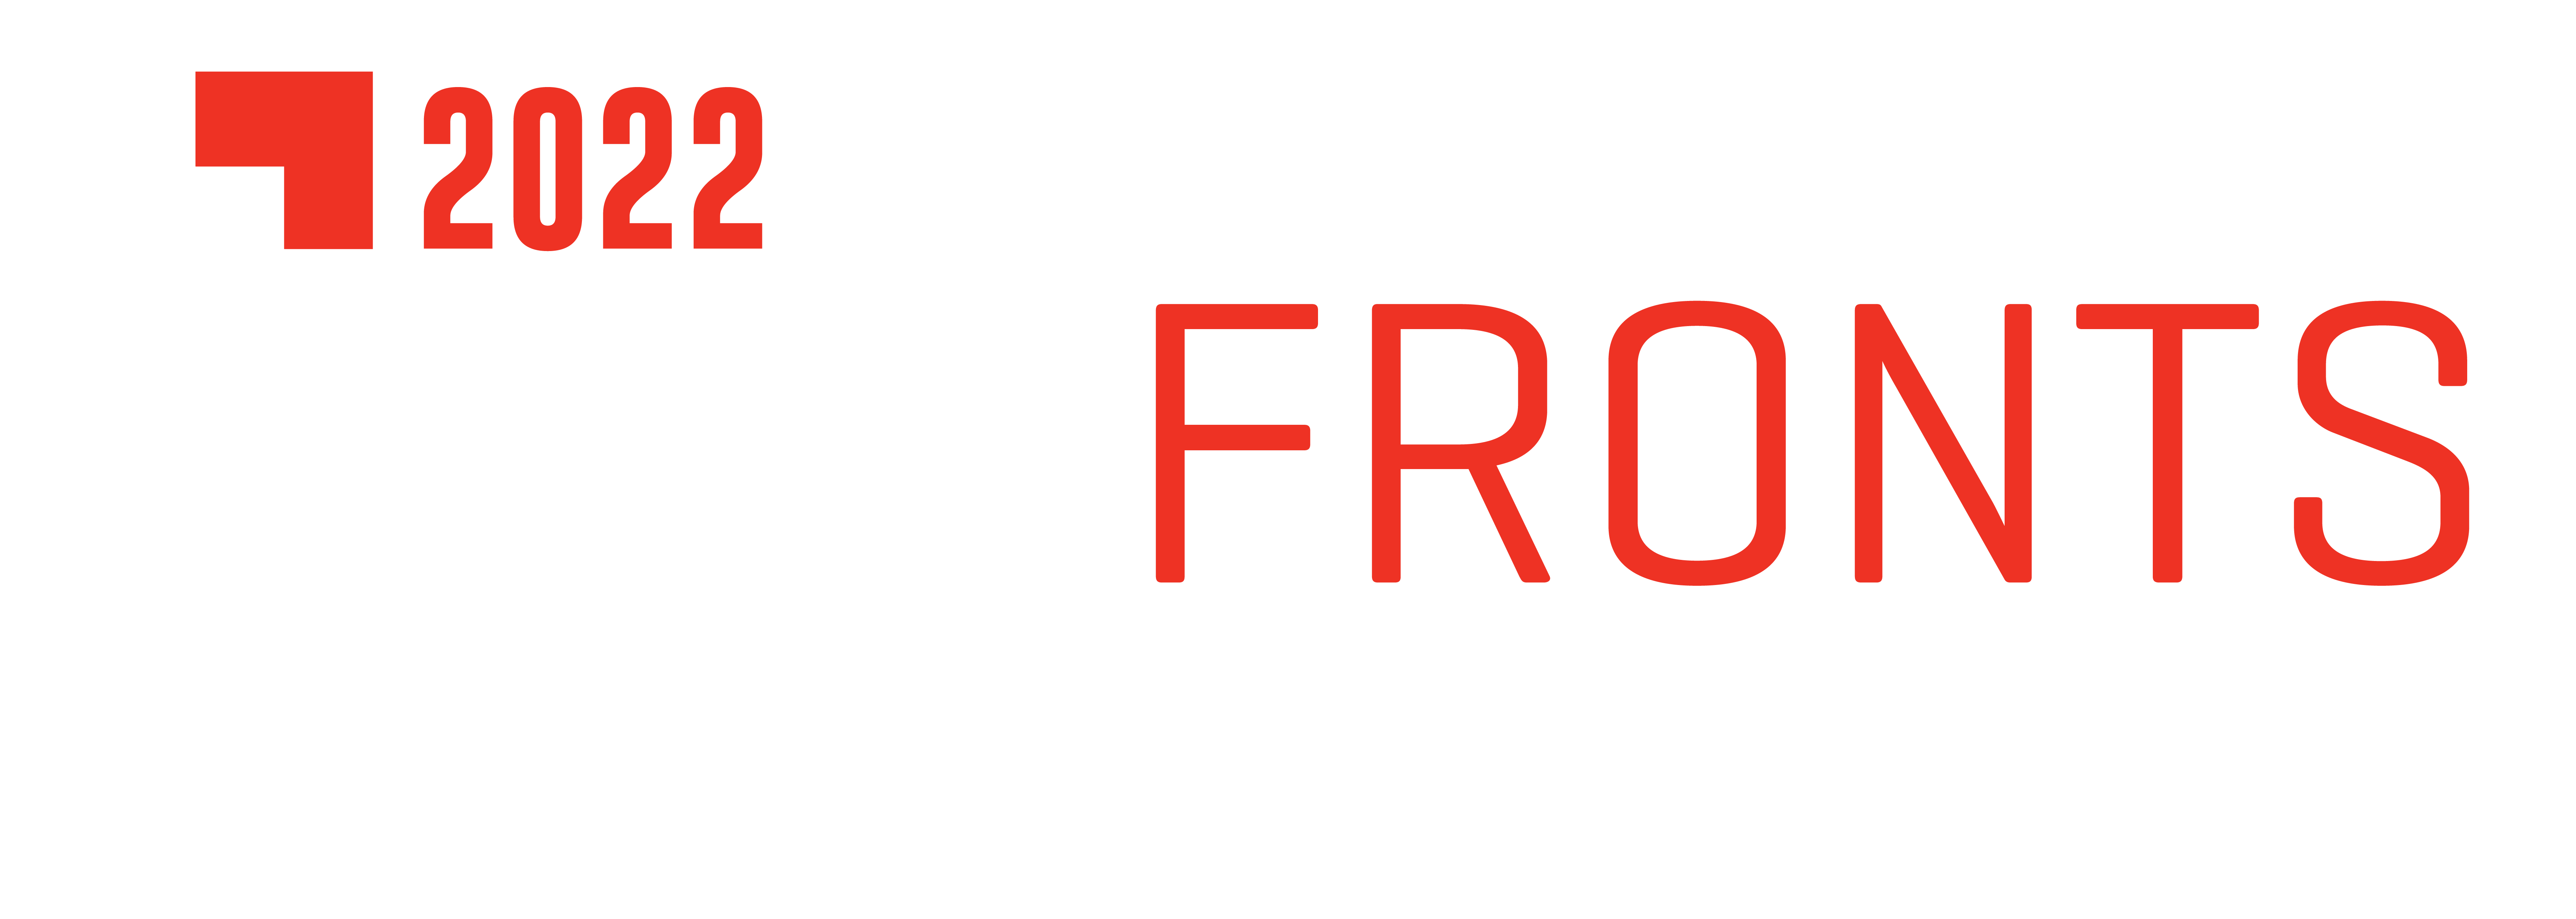 NewFronts 2022 logo